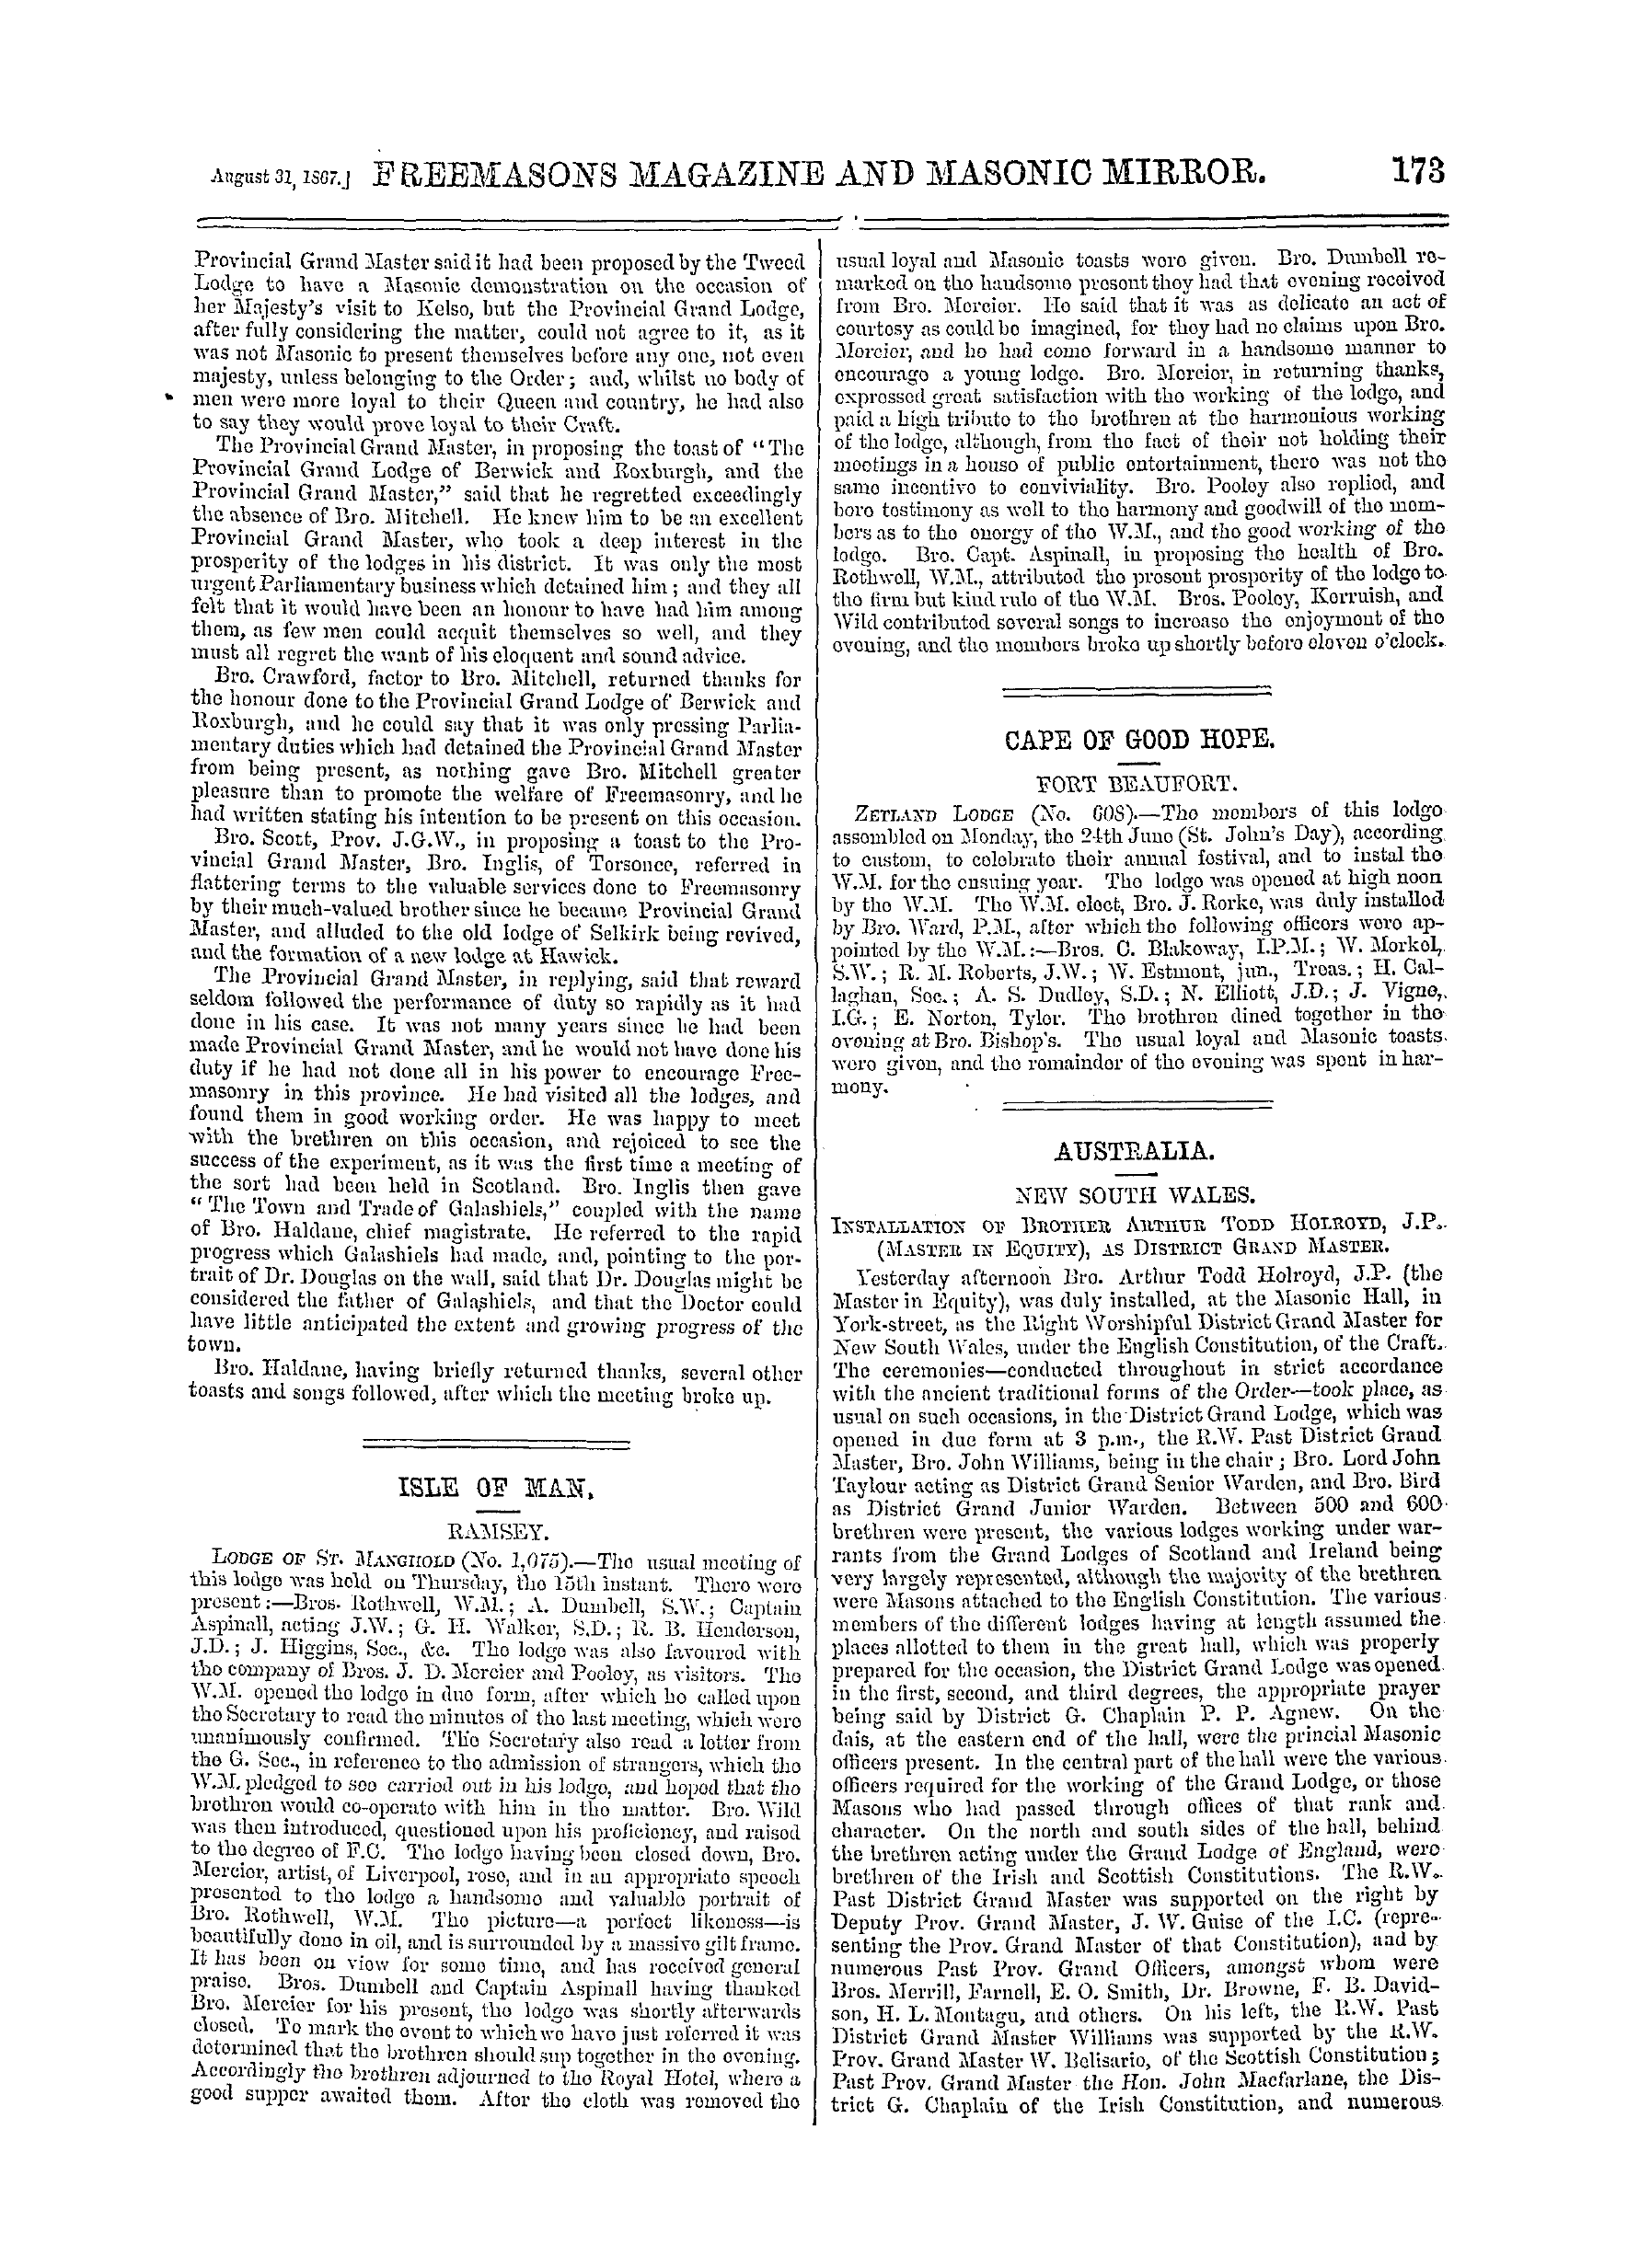 The Freemasons' Monthly Magazine: 1867-08-31 - Isle Of Han.